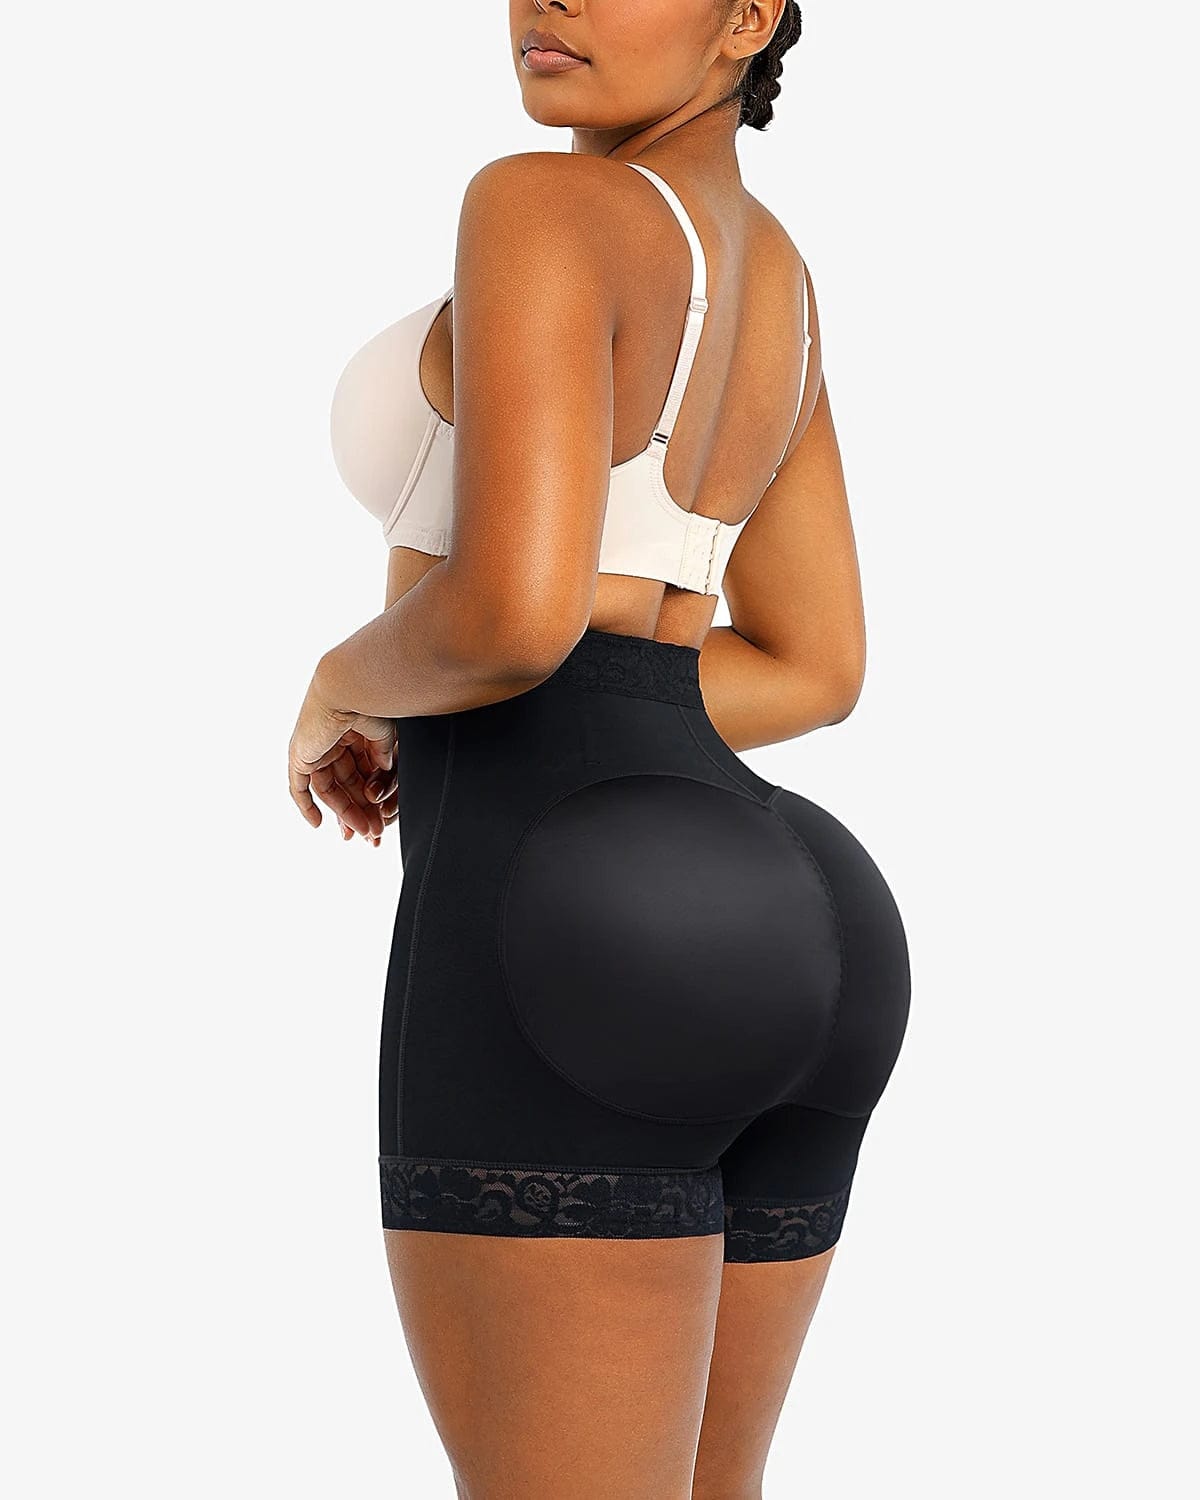 AirSlim® Lace Steel Boned Butt Enhancer